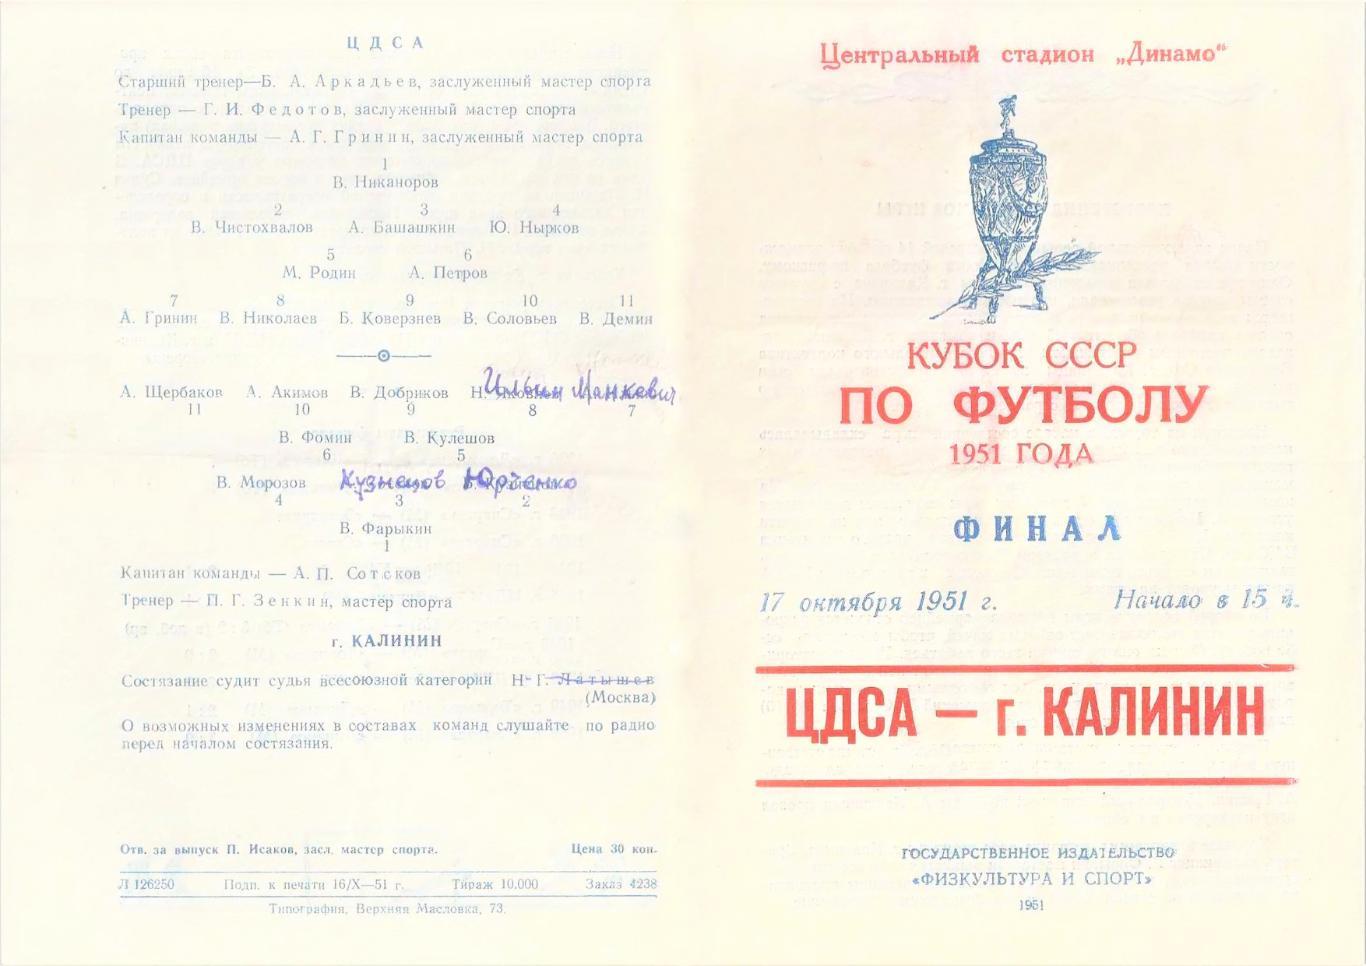 17.10.1951. ЦДСА (Москва) - команда города Калинин (копия)